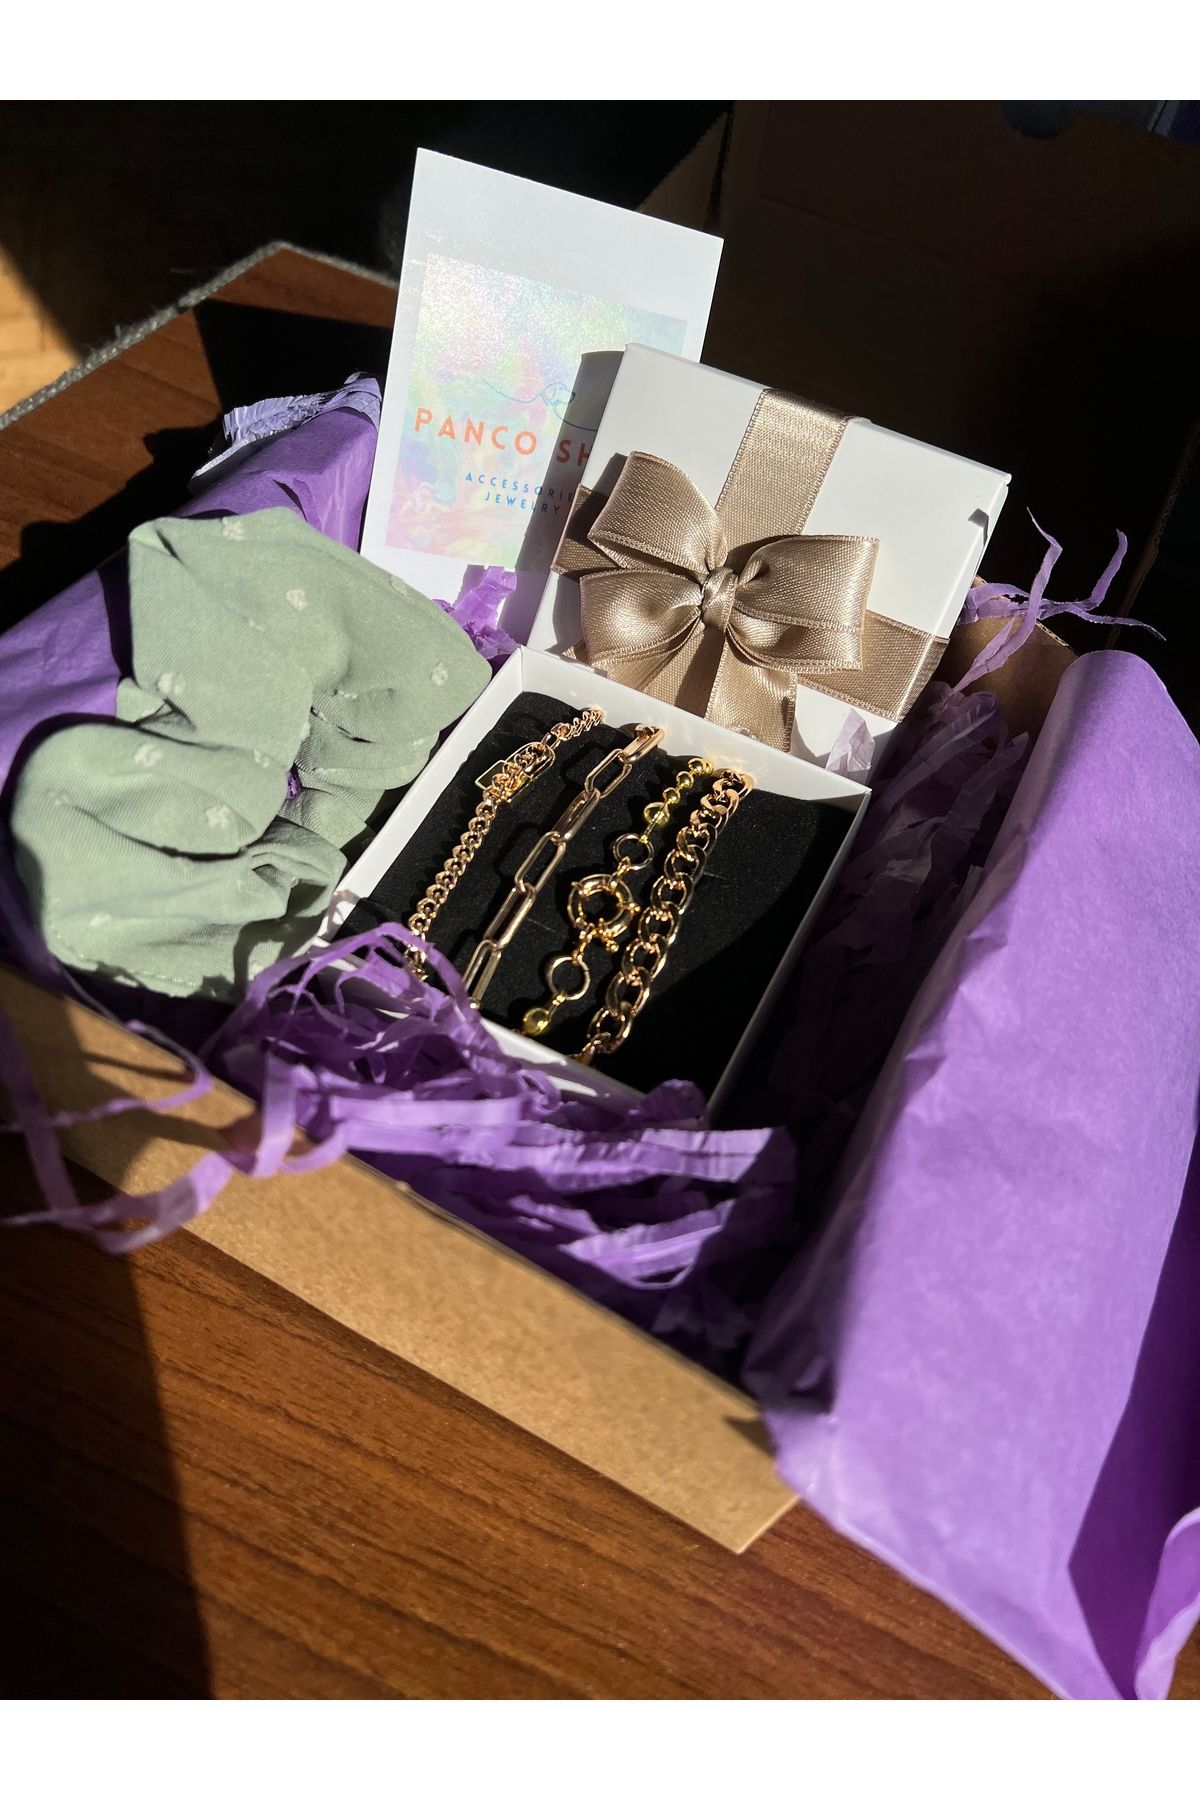 PANCO SHOP ACCESSORIES JEWELRY 4 ‘lü bileklik set ve toka Kutulu hediye paketi sepeti kızlar için hediye Işıl Işıl bileklik seti